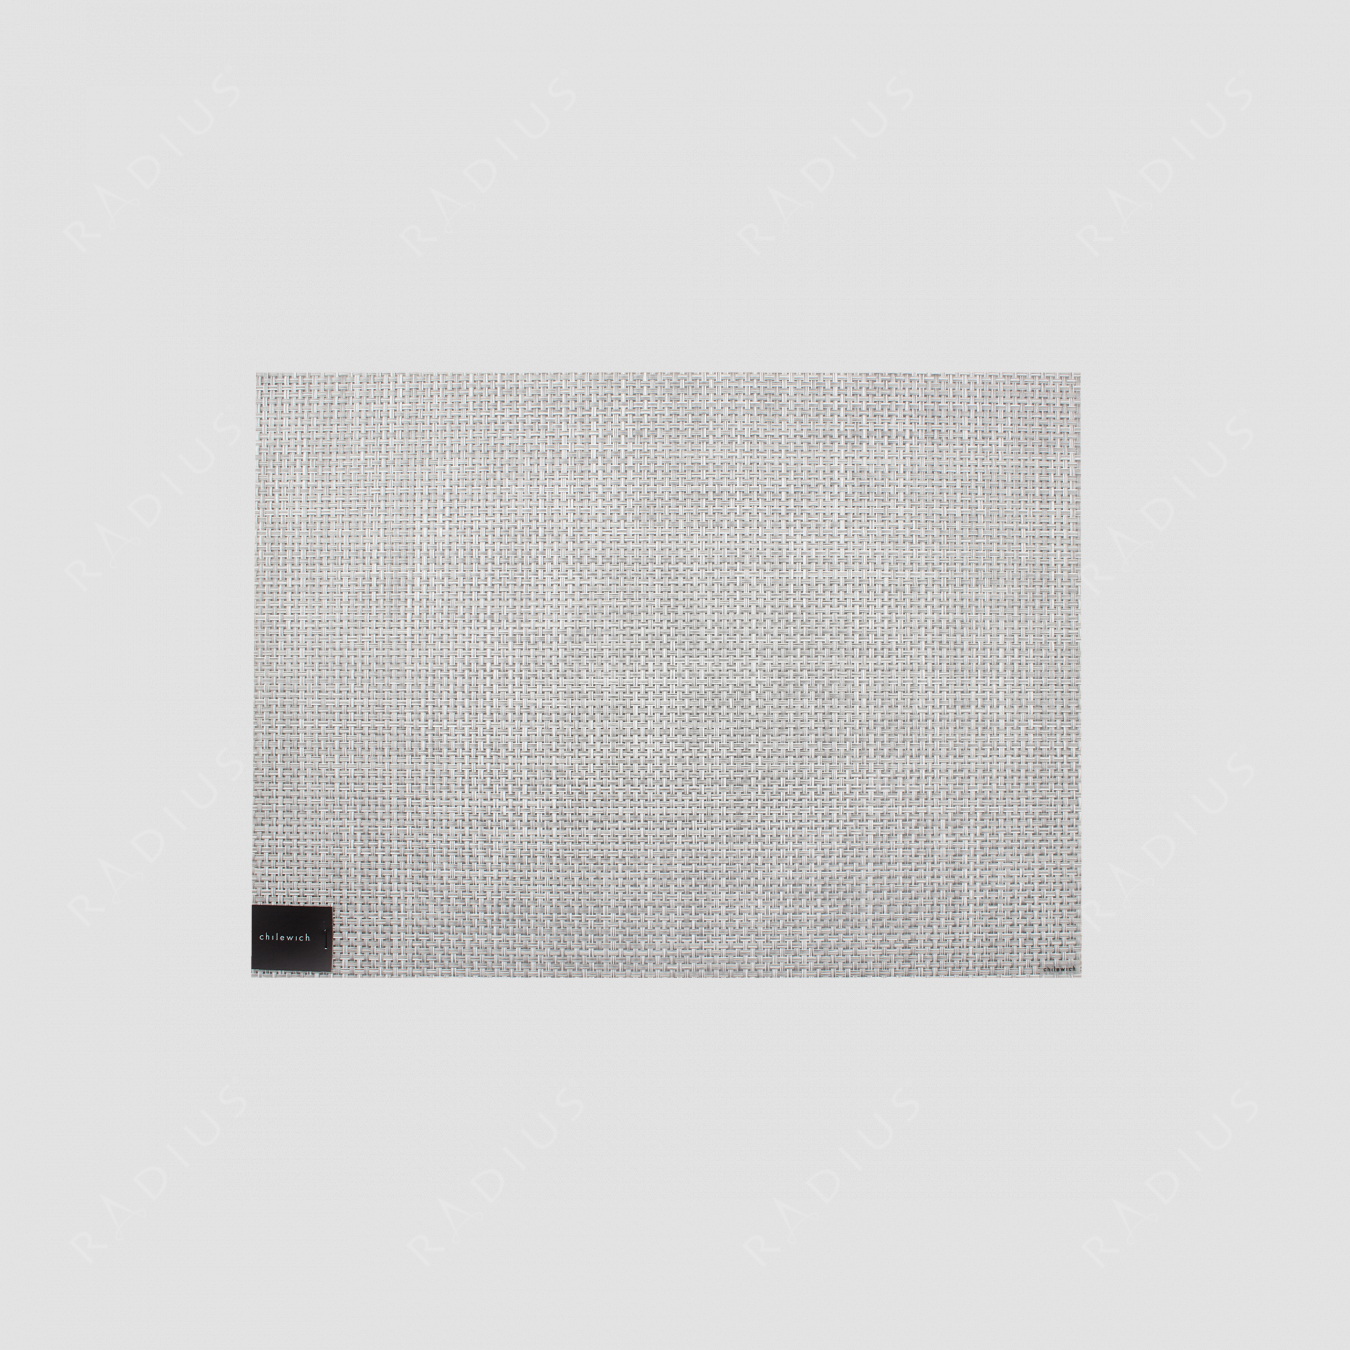 Салфетка подстановочная, жаккардовое плетение, винил, (36х48) White/Silver, серия Basketweave, CHILEWICH, США